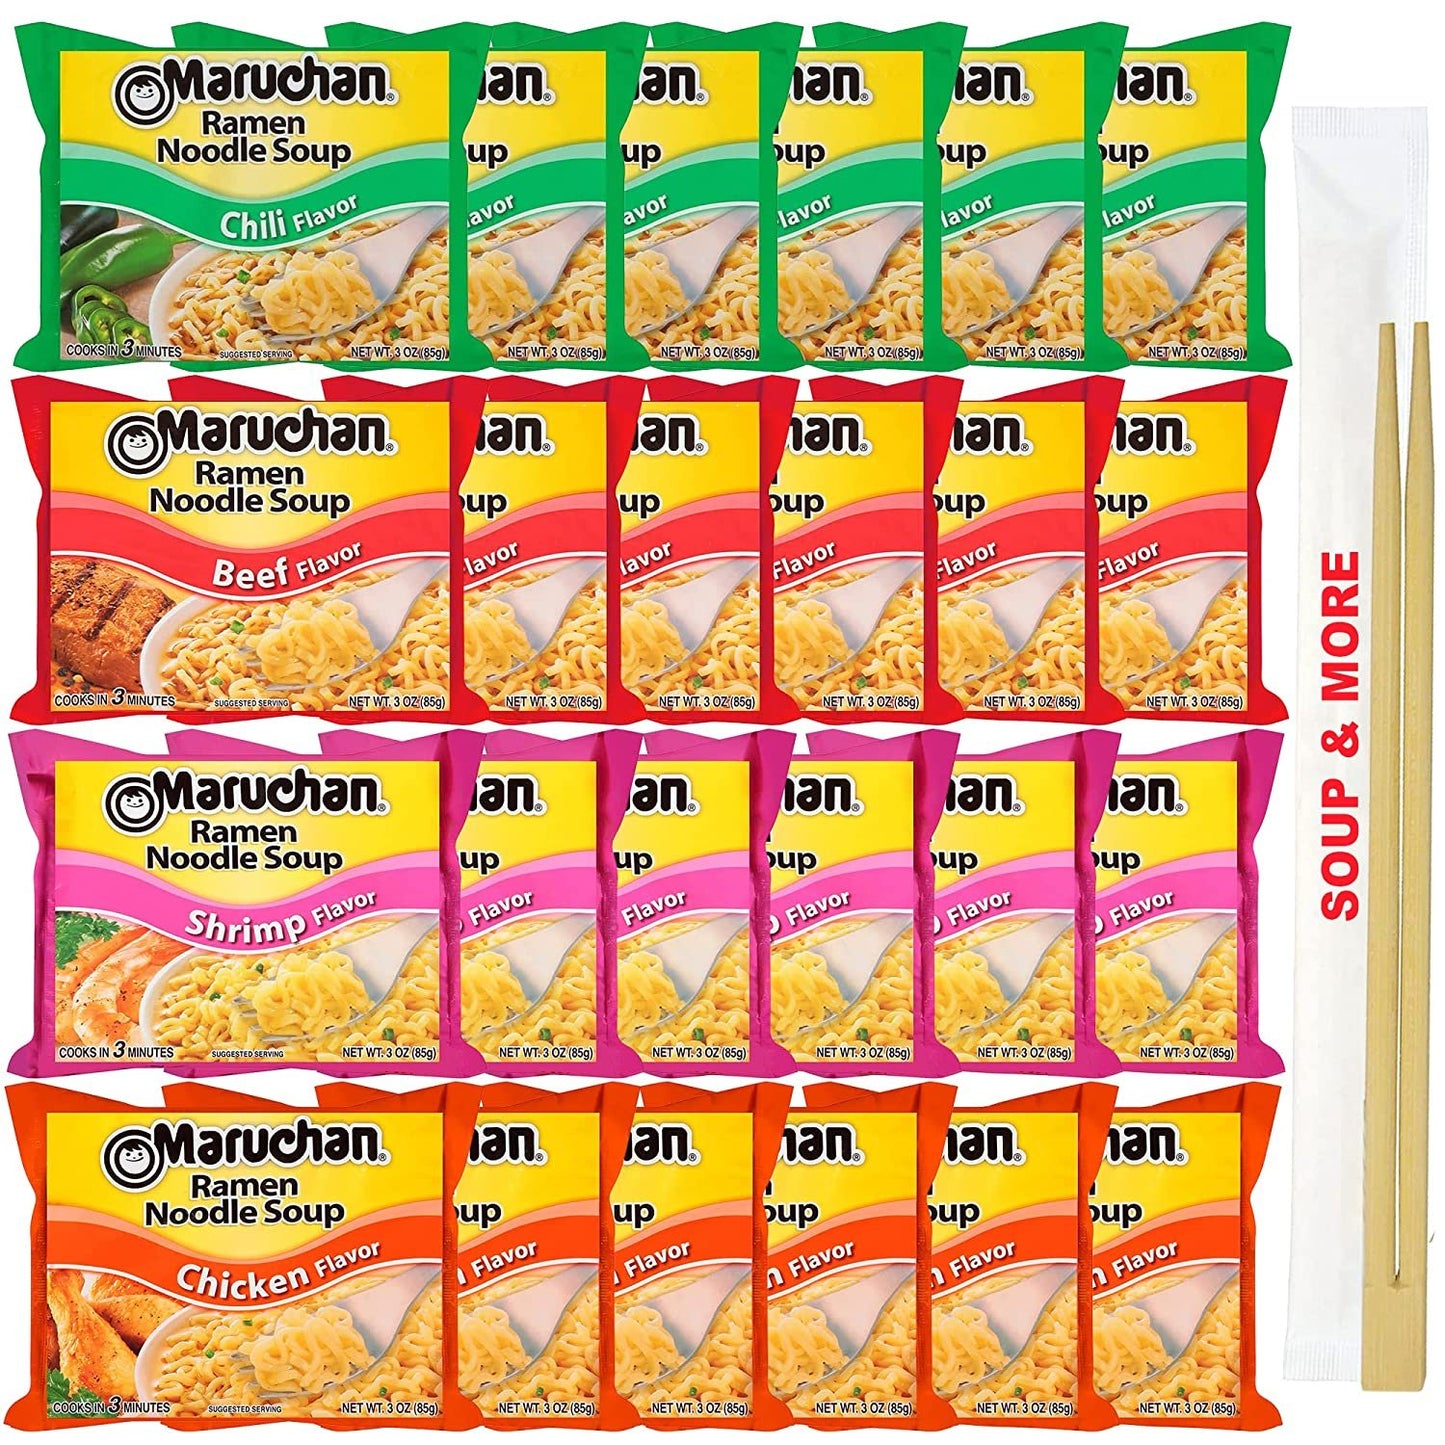 Maruchan Ramen Instant Soup Noodles Packs 24 Count - 6 Shrimp Flavor, 6 Beef , 6 Chili , 6 Chicken Pack Flavor Lunch / Dinner Variety, 4 Flavors